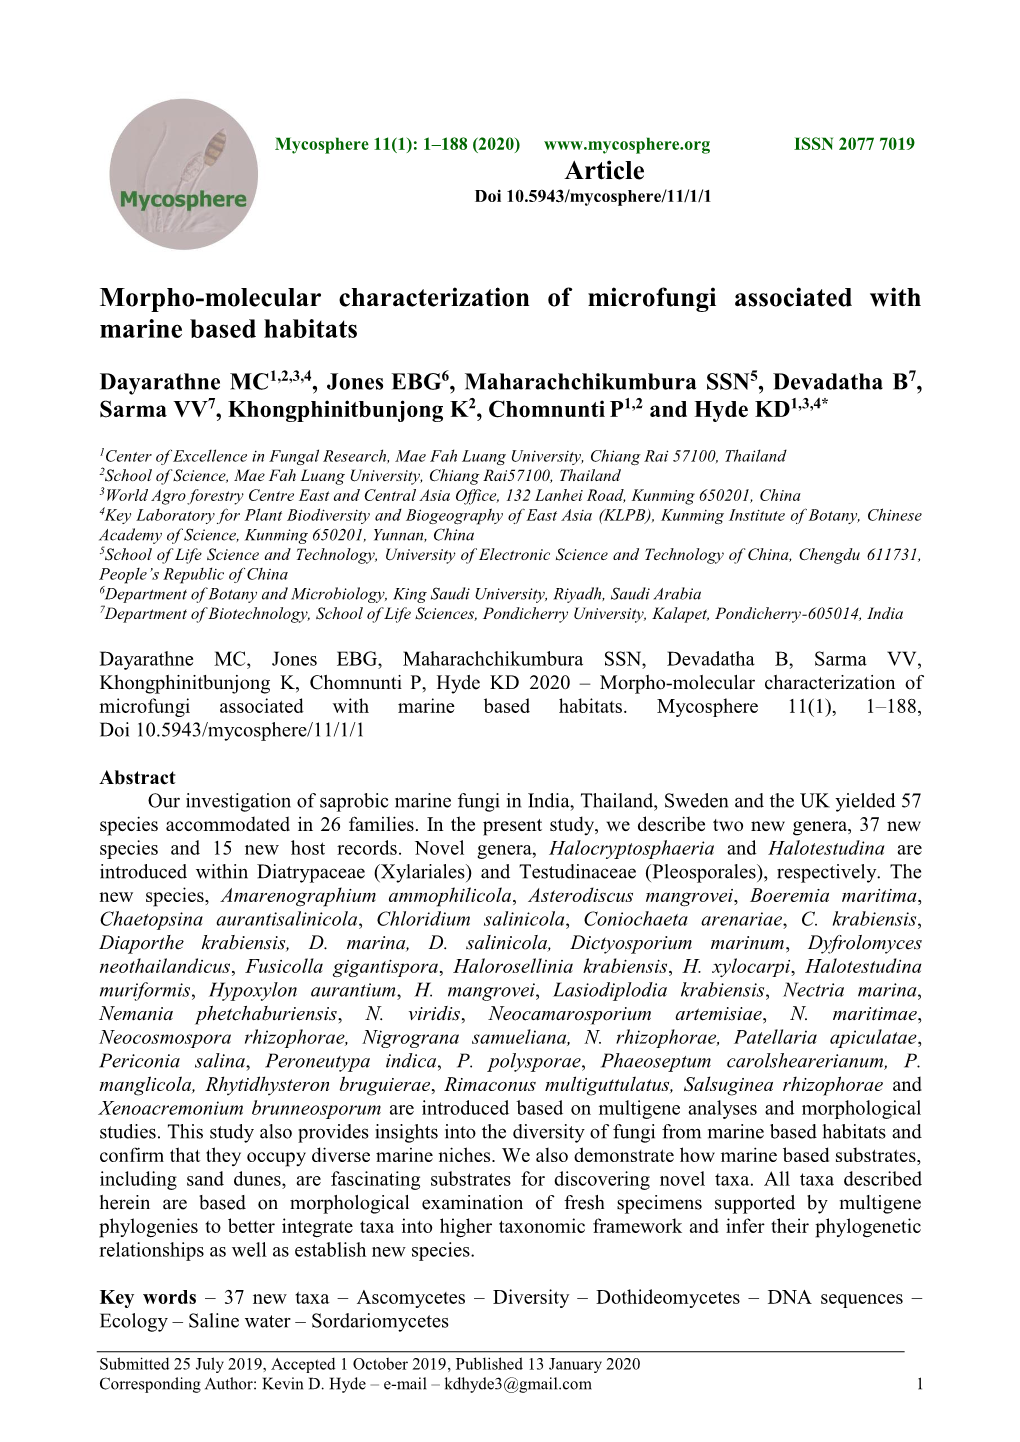 Morpho-Molecular Characterization of Microfungi Associated with Marine Based Habitats